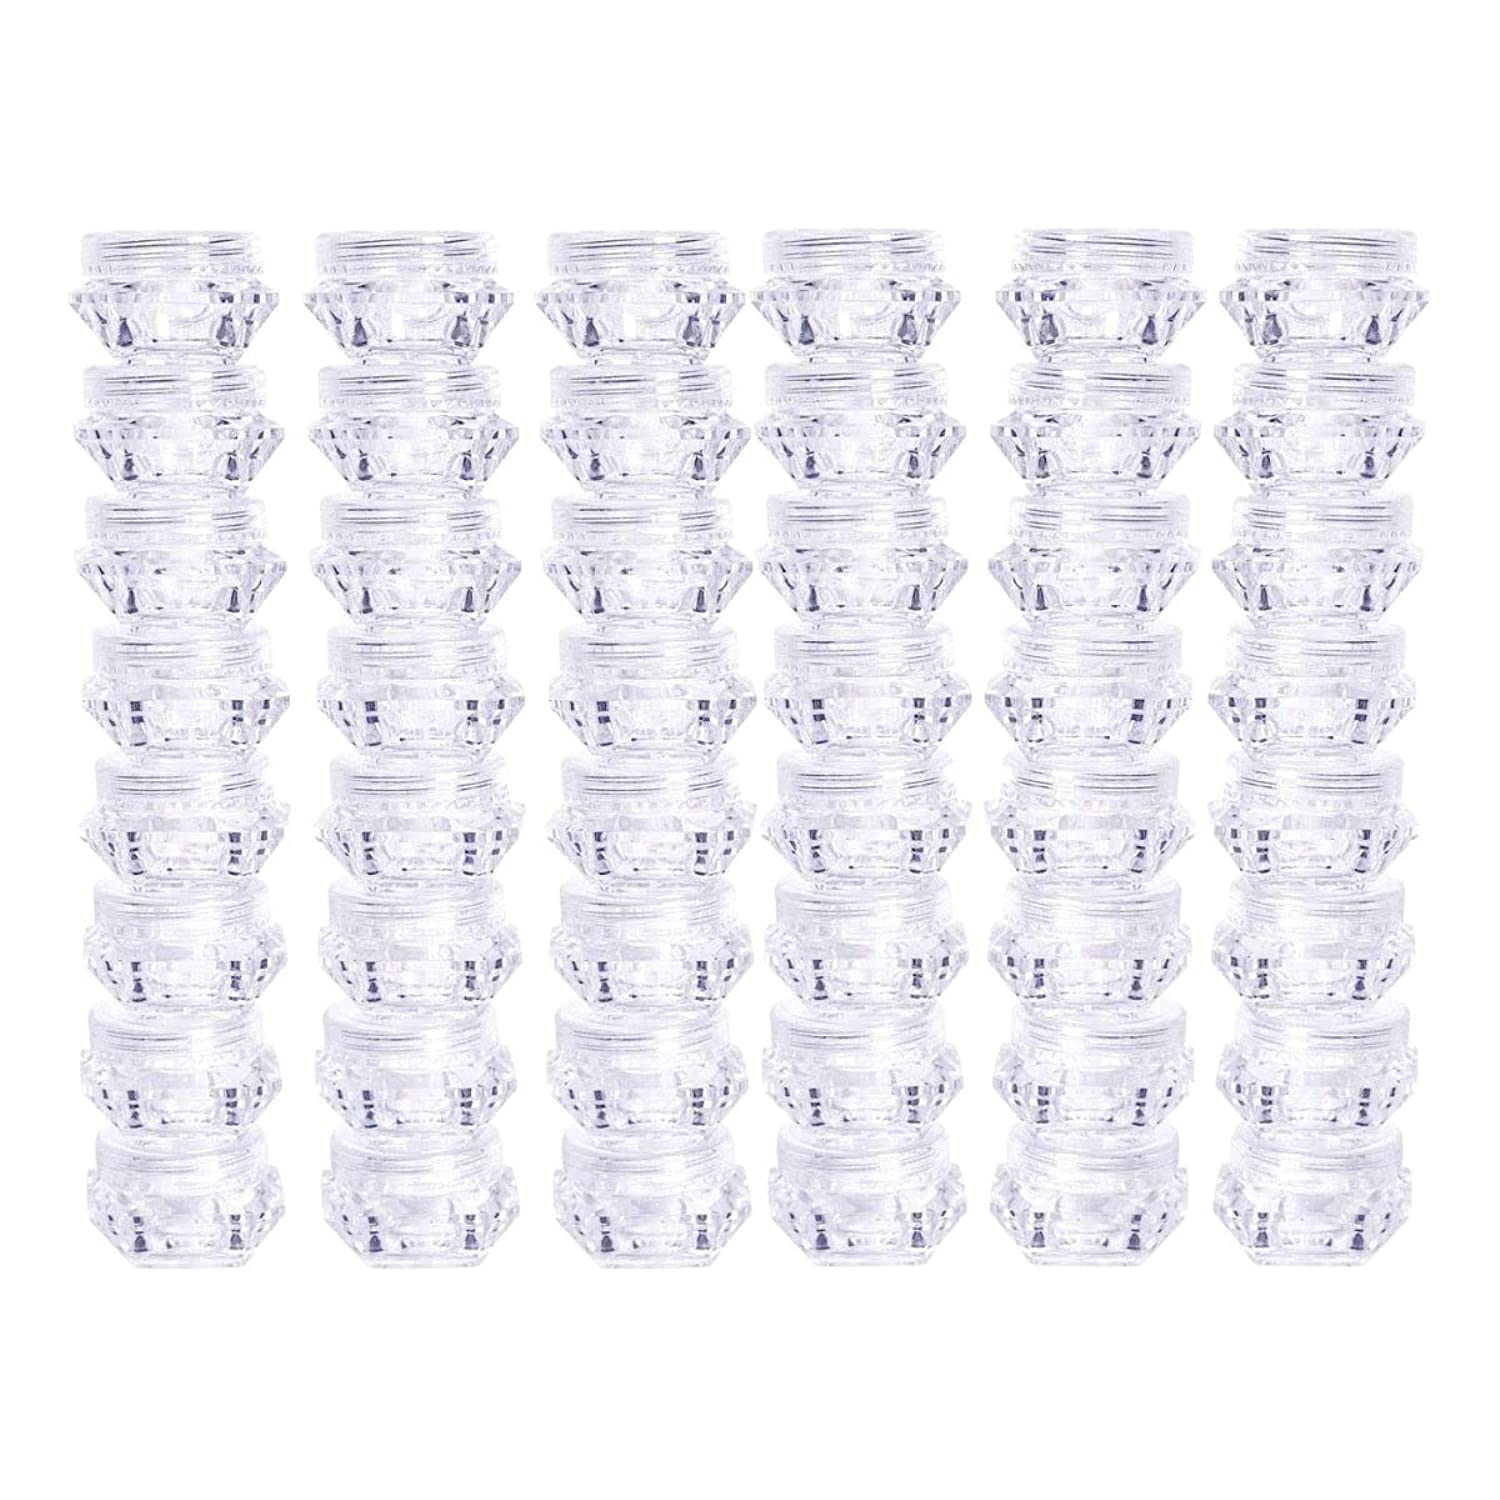 LIYAR 5g Cosmetic Jars Makeup Plastic Jars BPA FREE Samples Lip Balm Containers Empty Plastic Jars Cosmetic Containers Small Plastic Containers with Lids(Diamond Shaped,40 Pack)